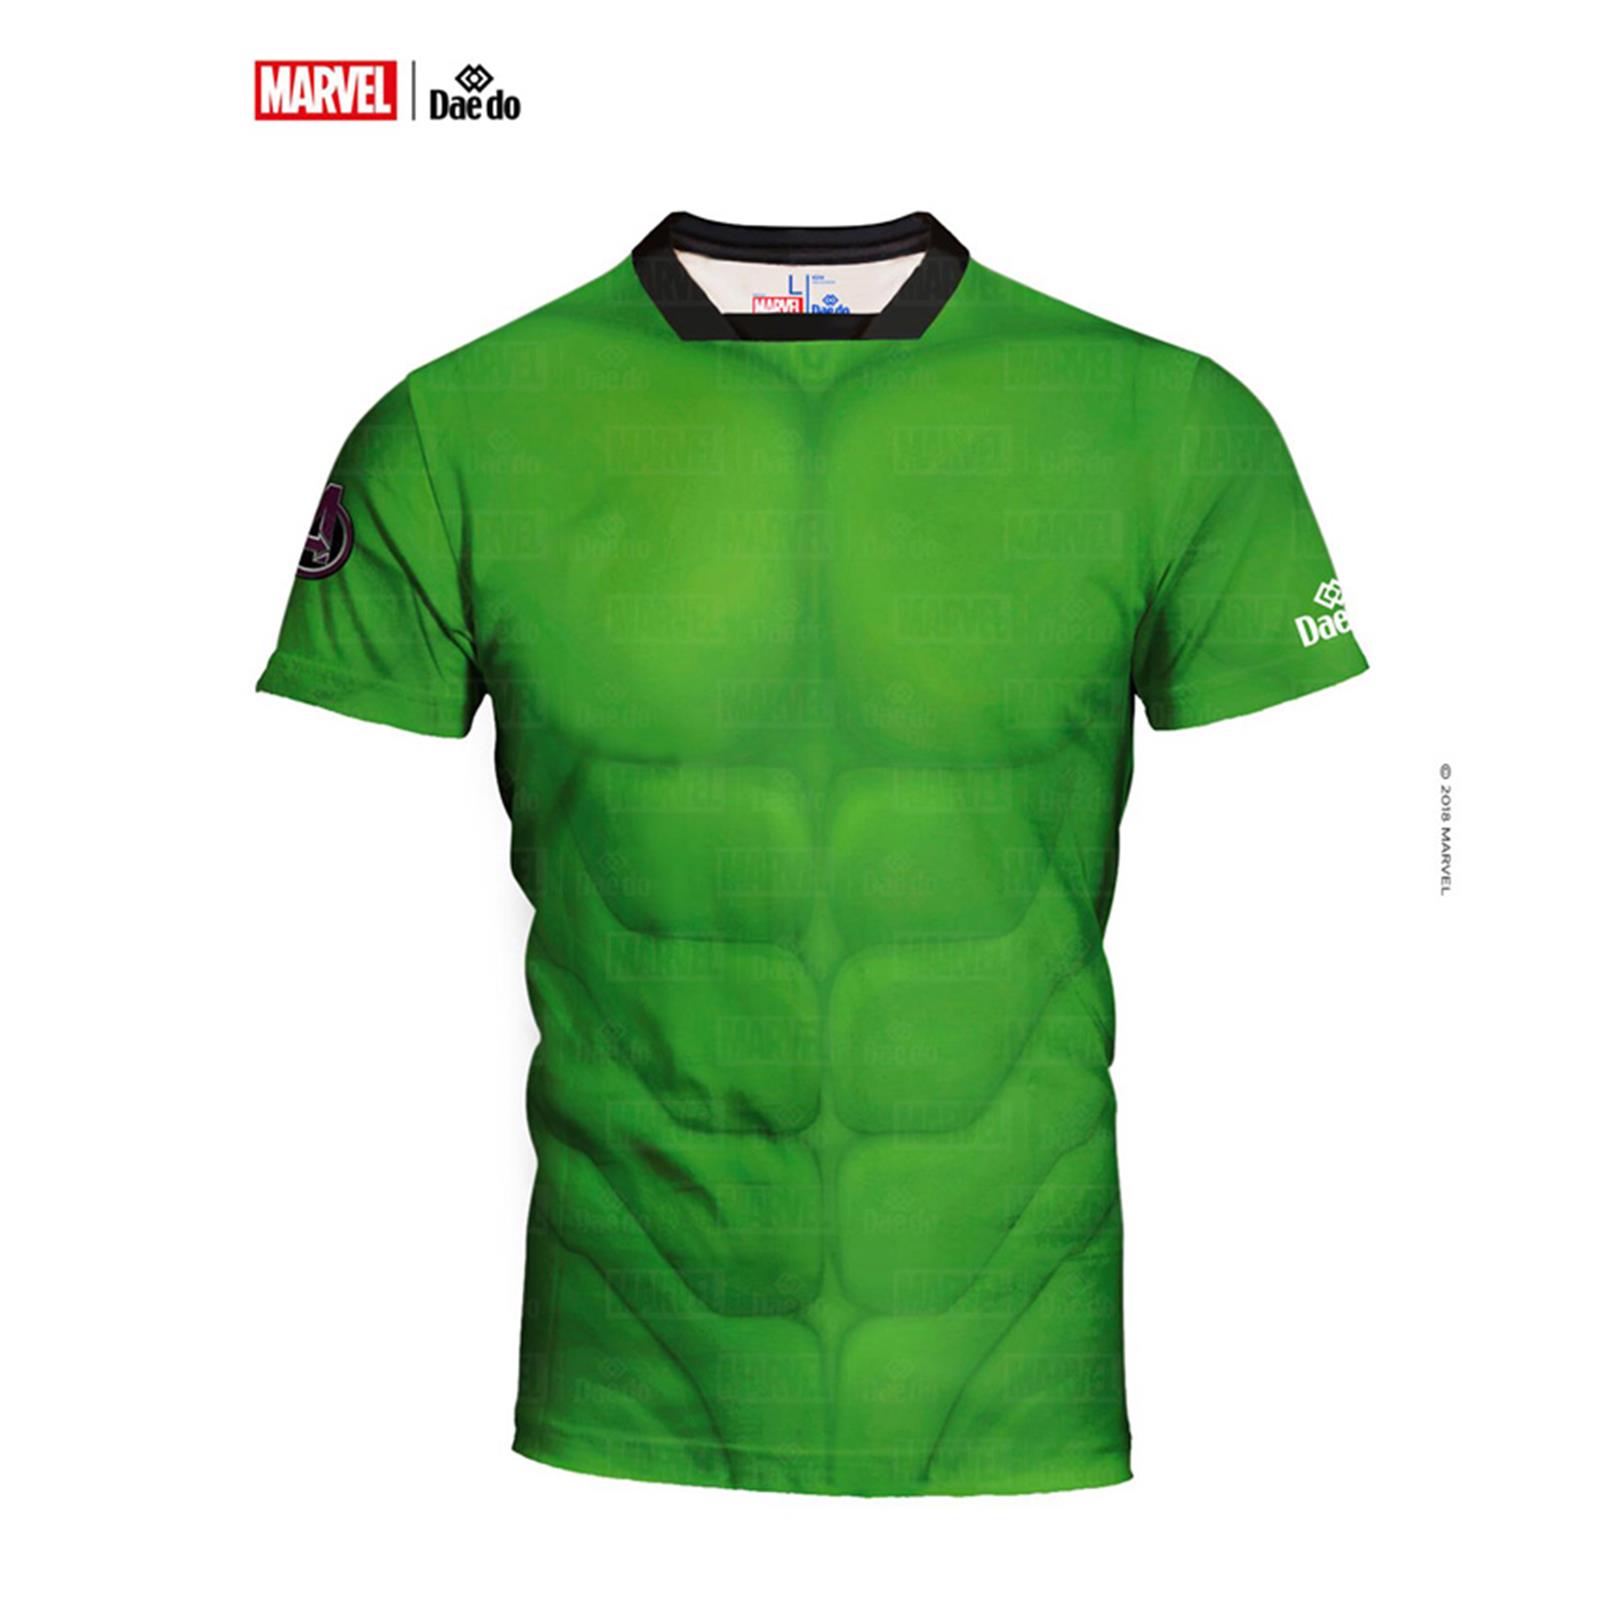 Dae Do Maglietta Hulk Full Print Slim Fit (XL - VERDE)